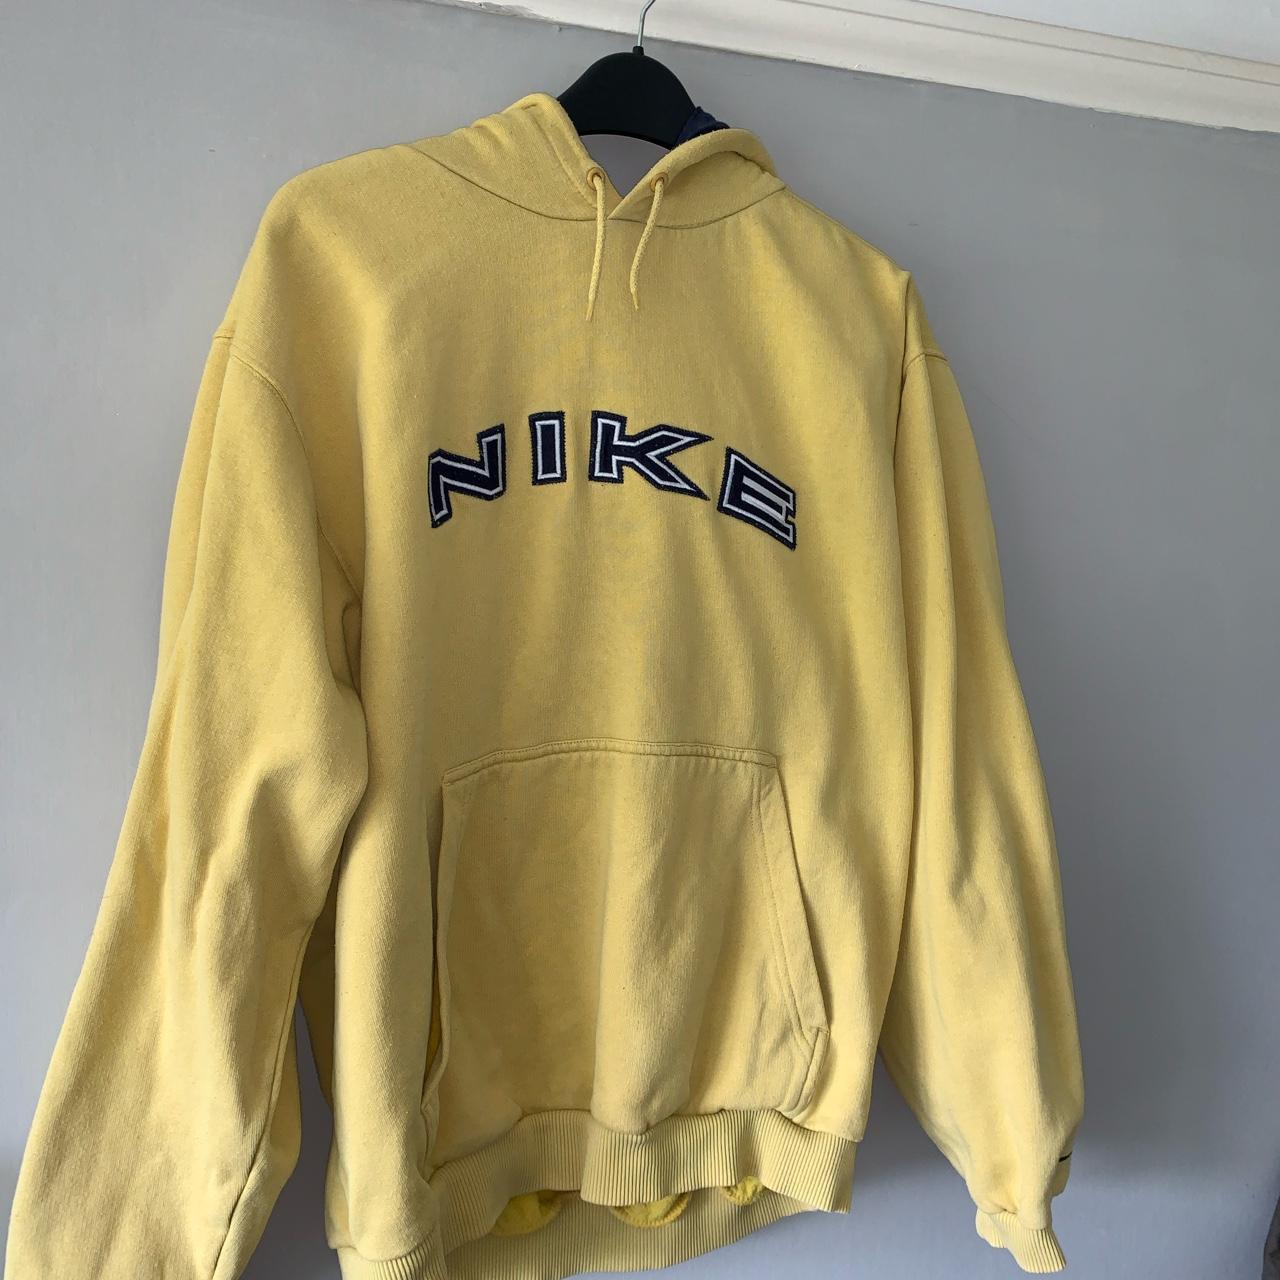 Vintage Nike spell out hoodie in yellow #rare... - Depop